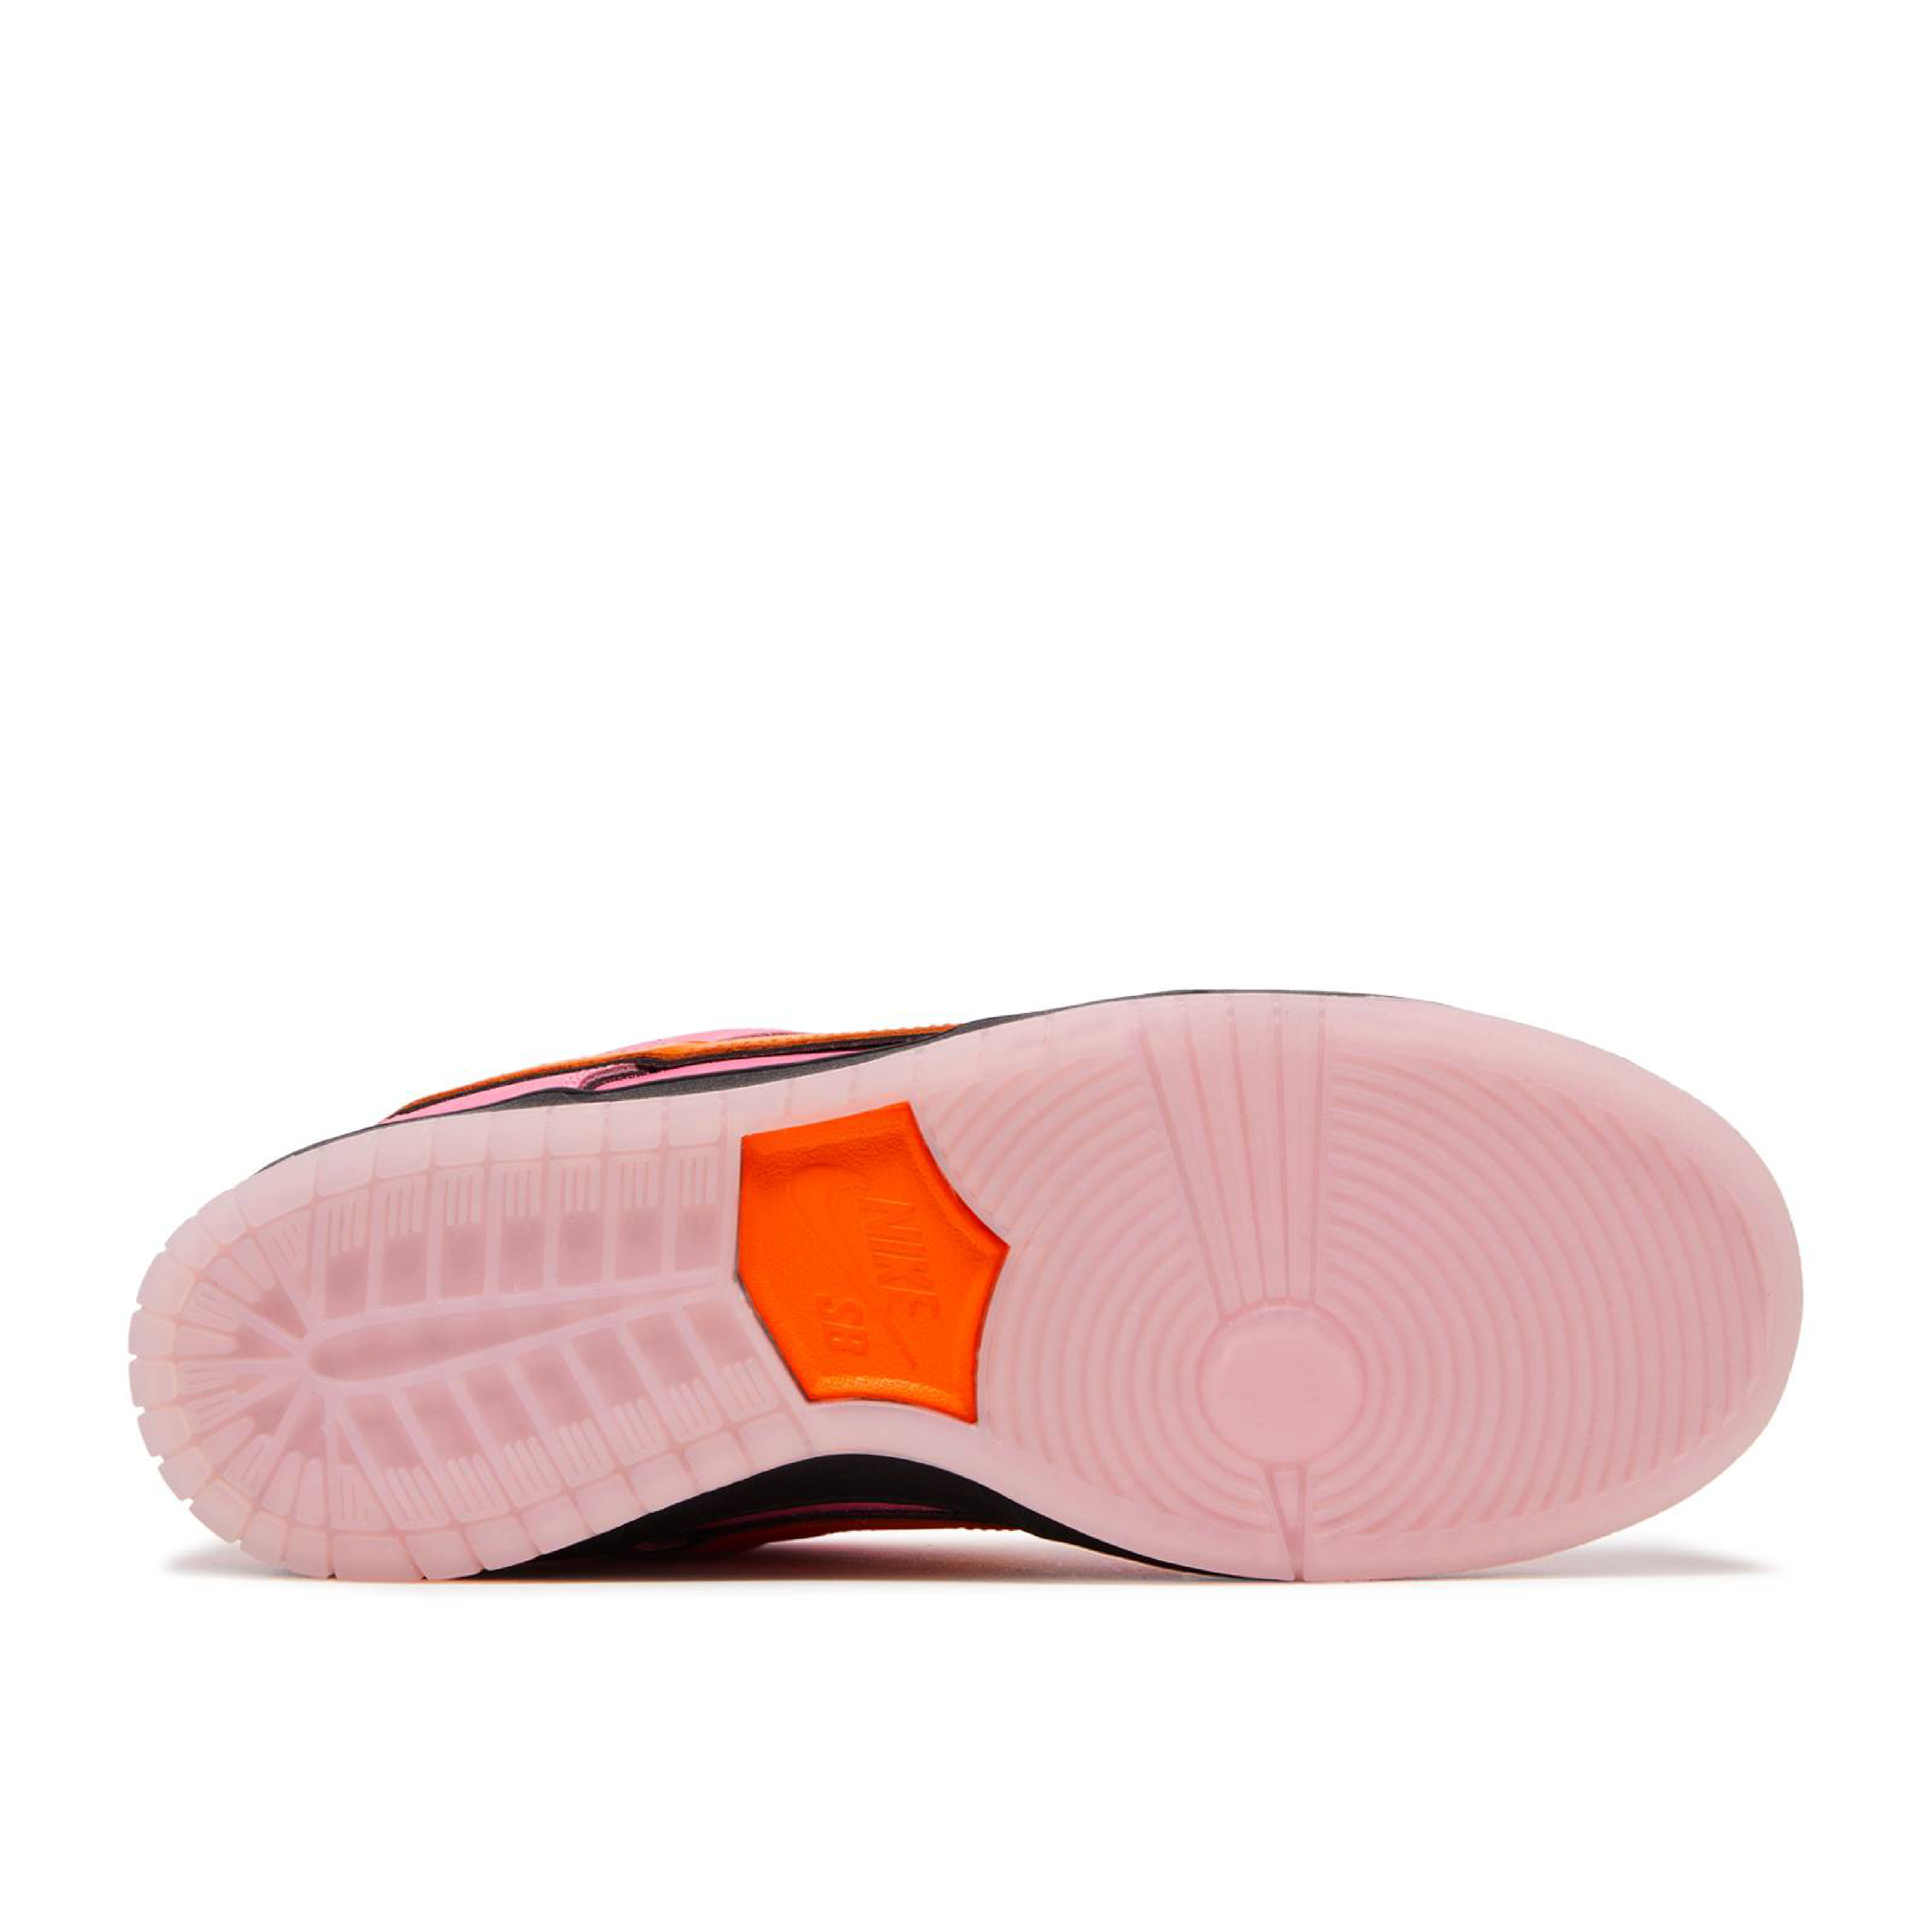 Nike/Superchicche SB Dunk - "Blossom"